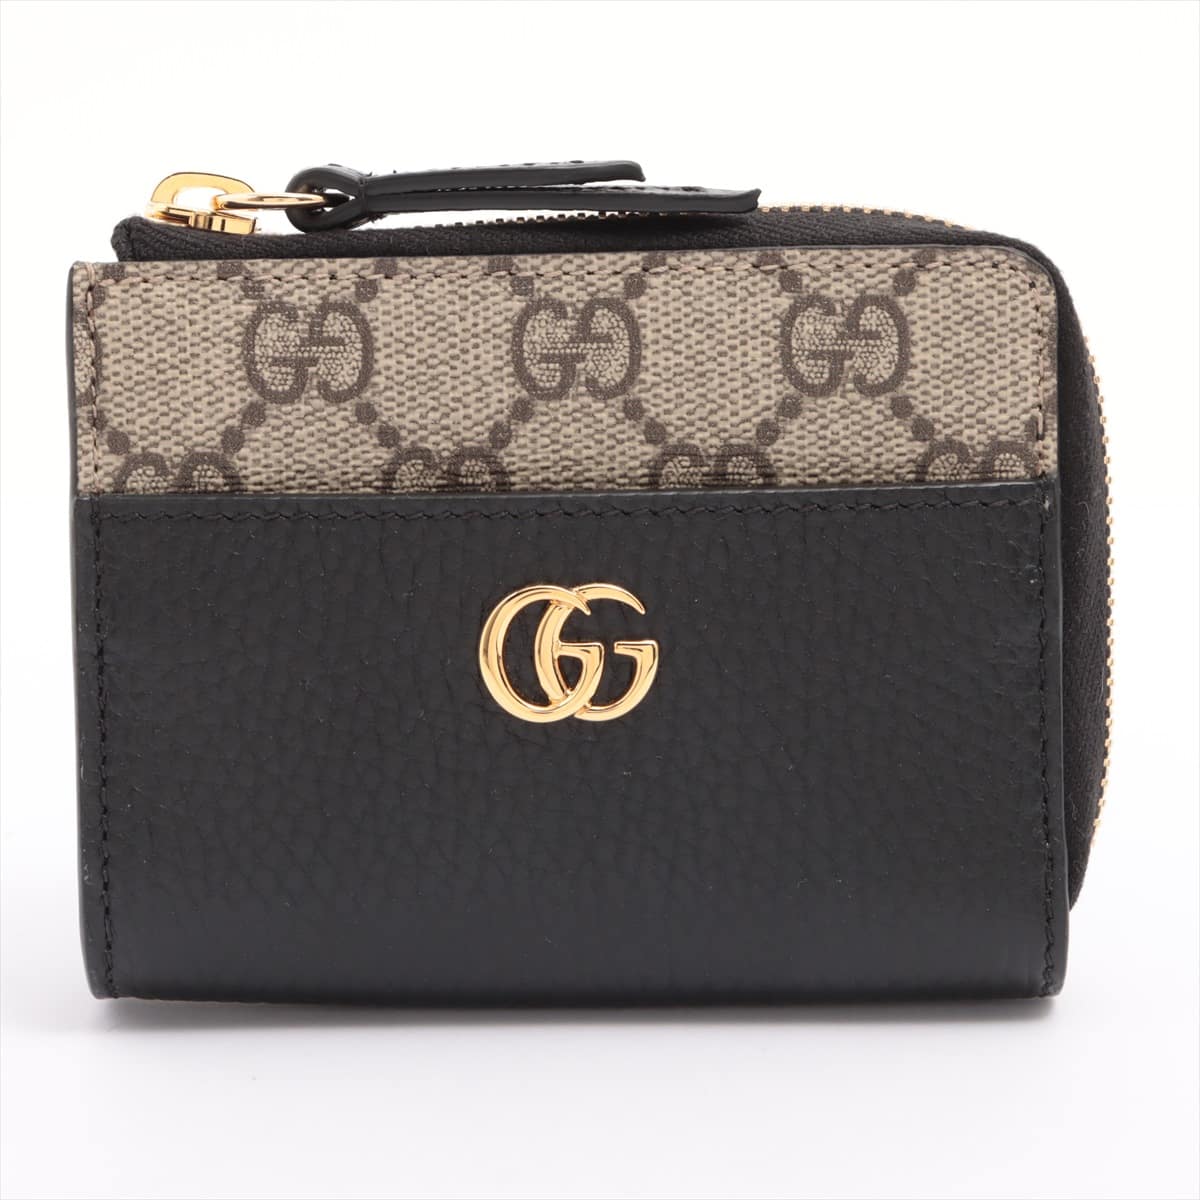 Gucci GG Marmont GG Supreme 658609 PVC & leather Wallet black x beige Fastener tape fluff